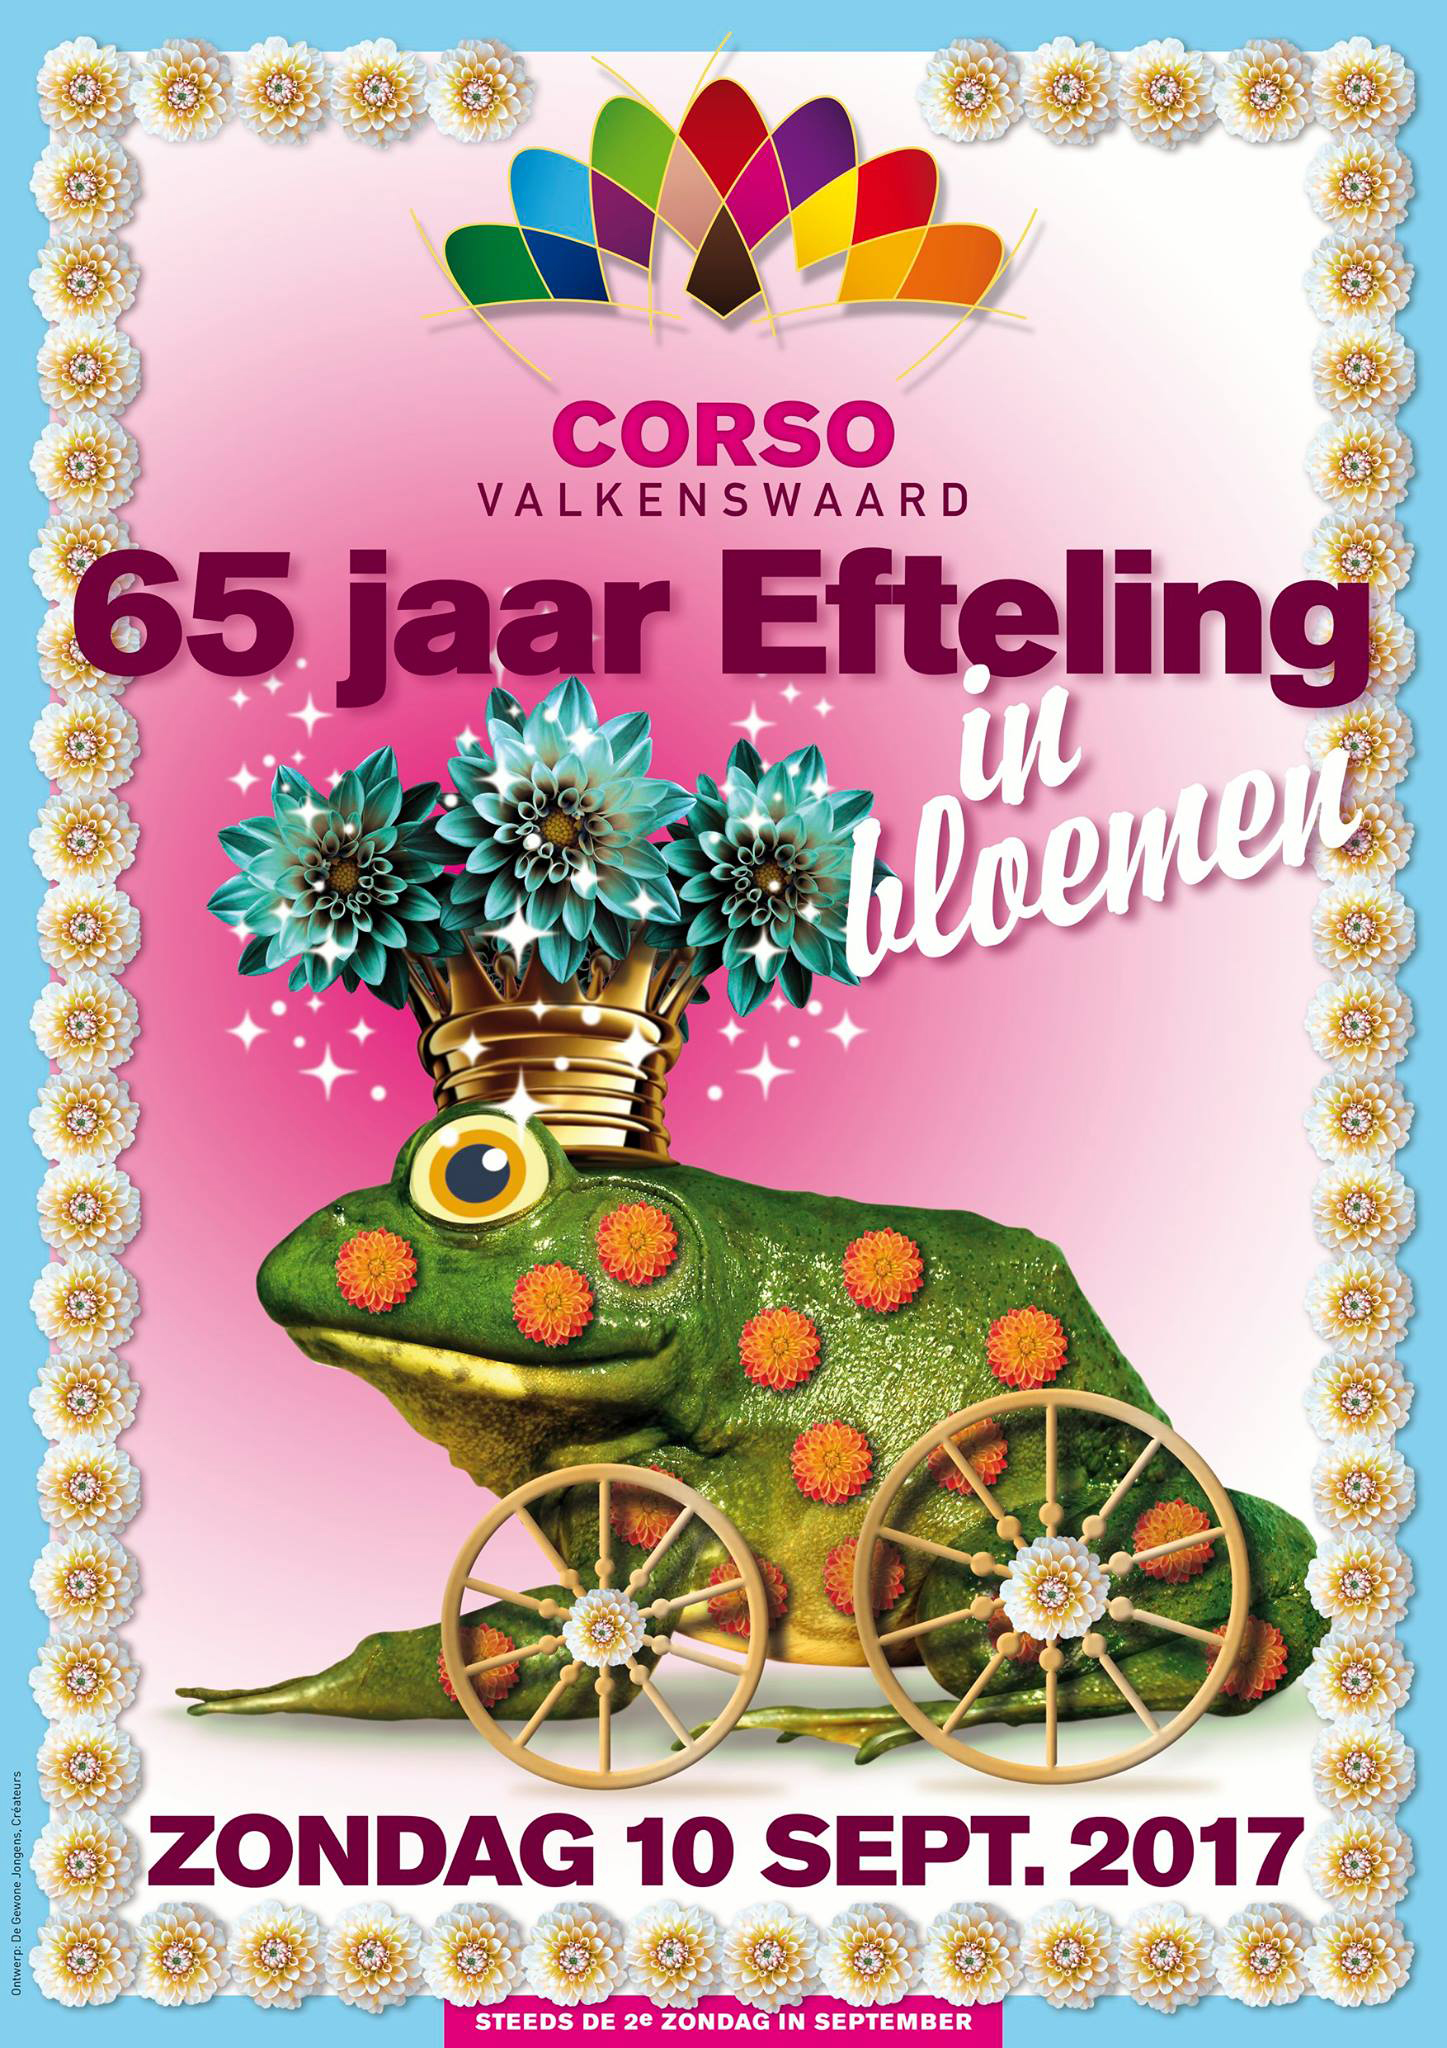 biologie Kerstmis Vierde CorsoNetwerk / Corso Valkenswaard 2017: 65 jaar Efteling in bloemen